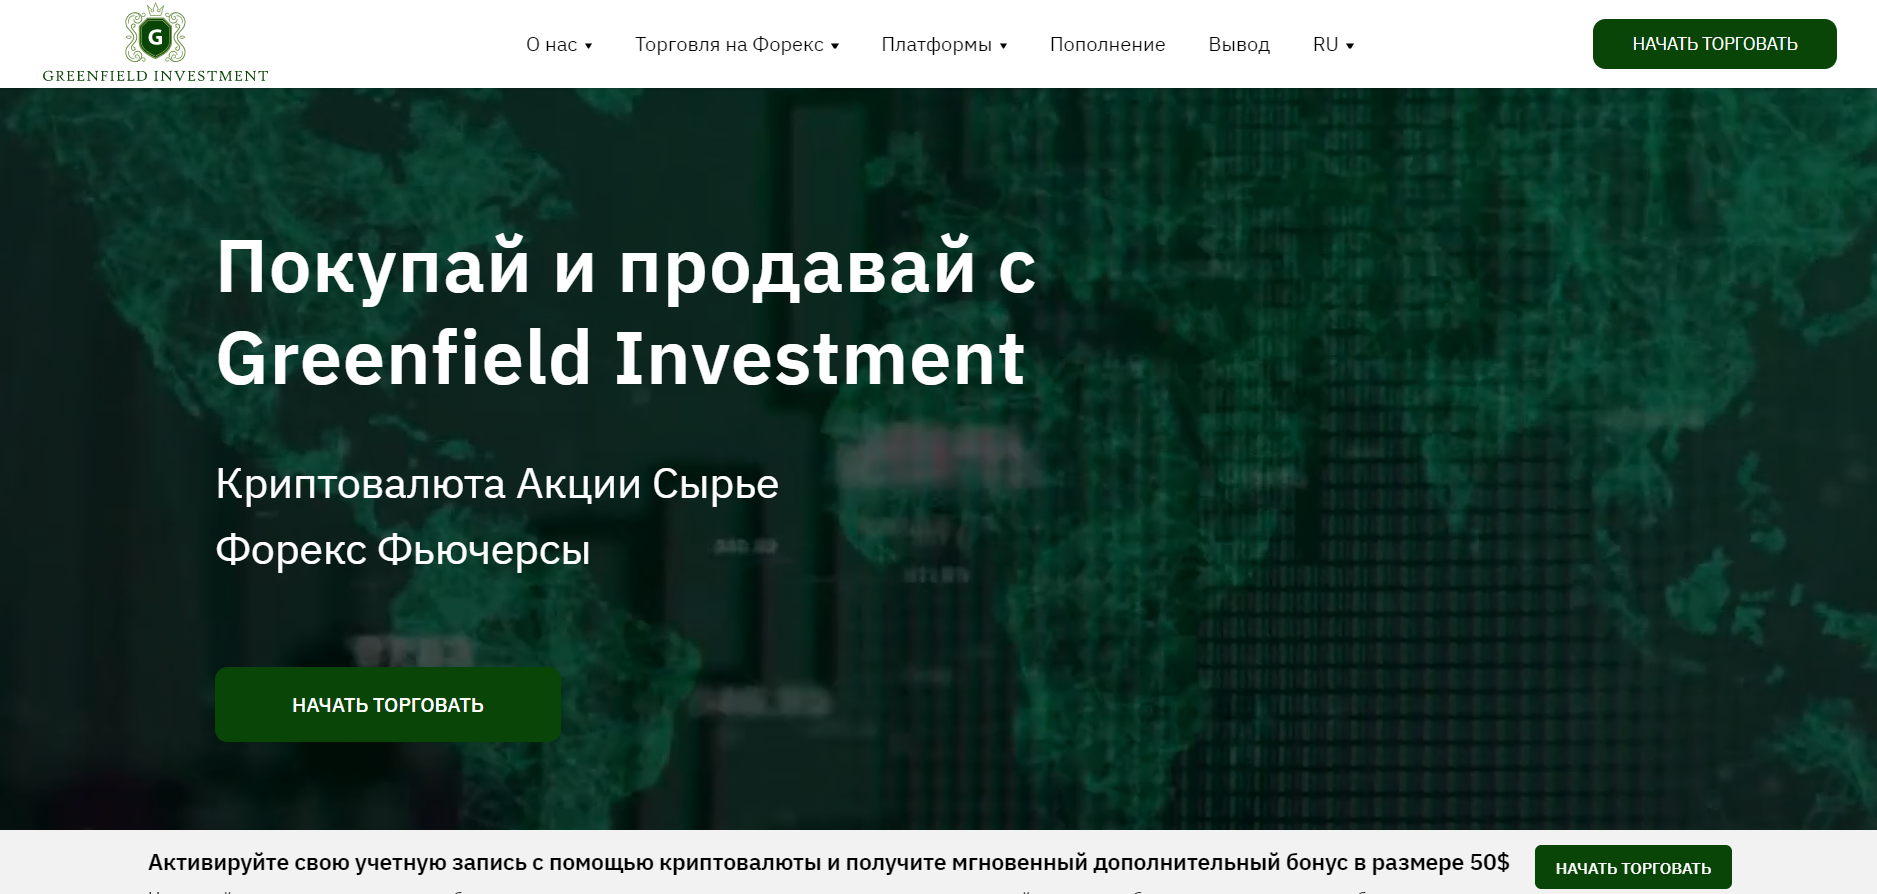 greenfield investment сайт компании 